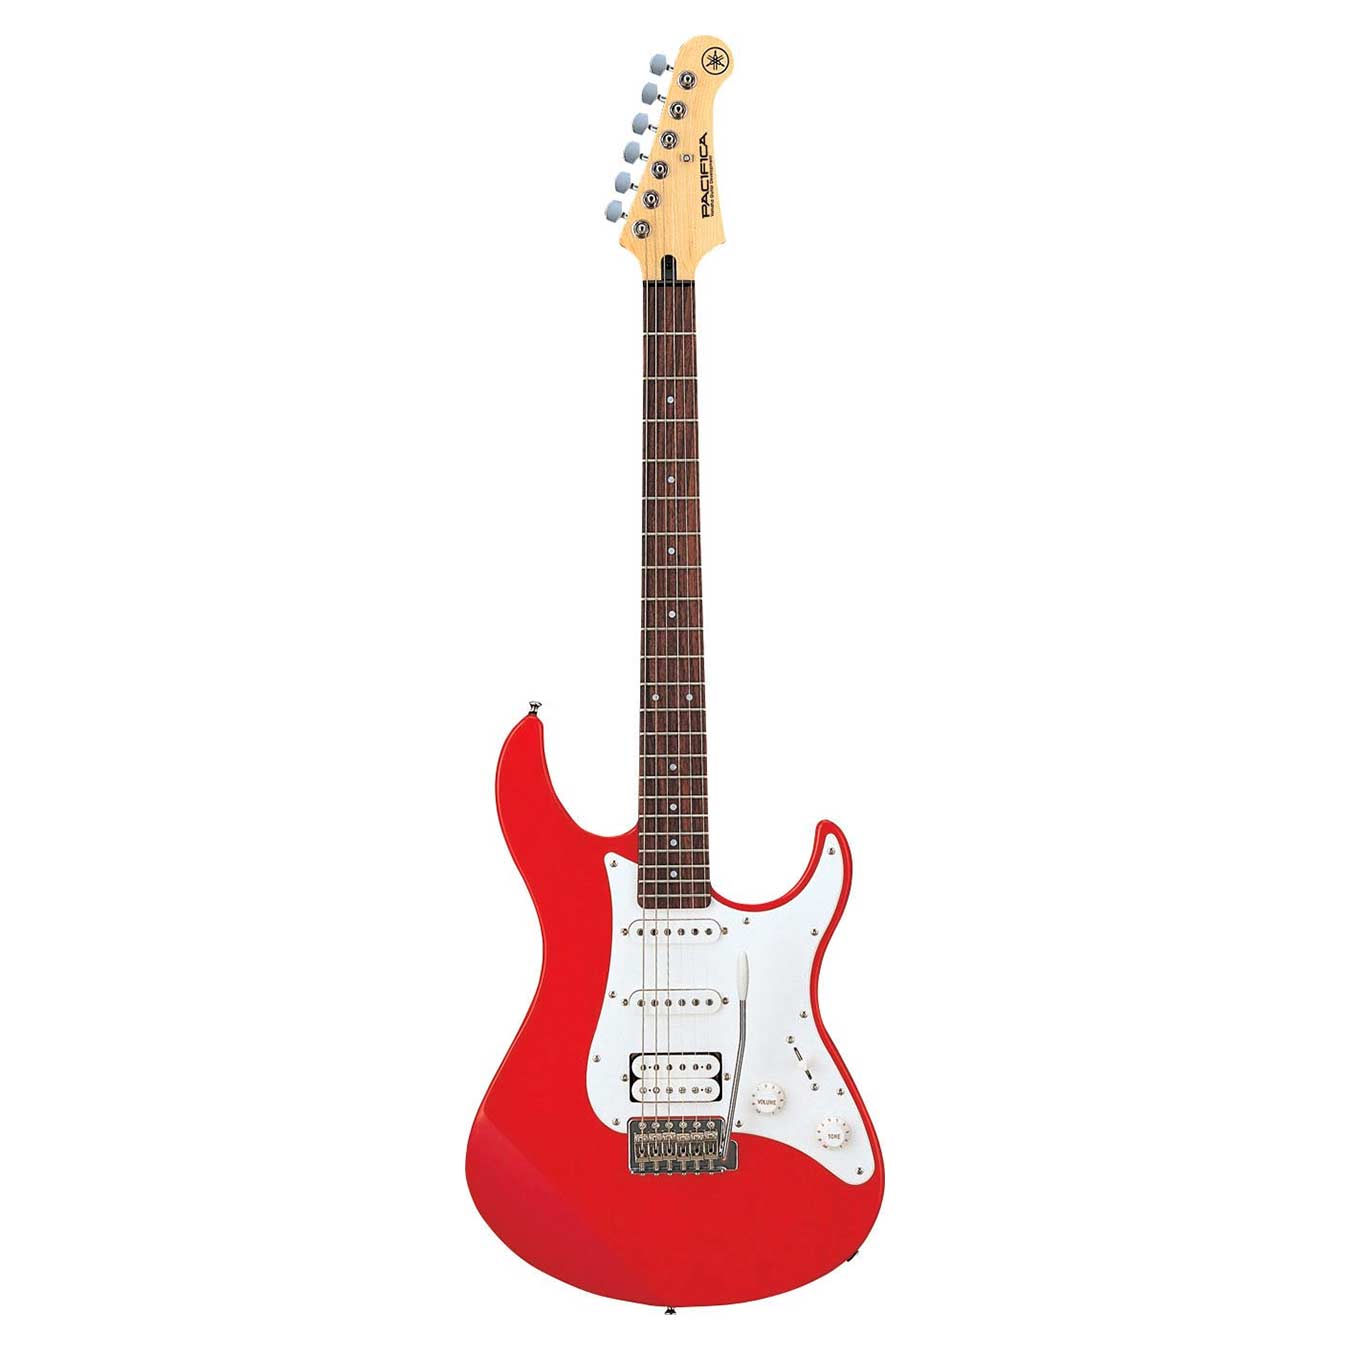 Guitarra eléctrica iniciación Yamaha Pacifica 112J Red Metallic